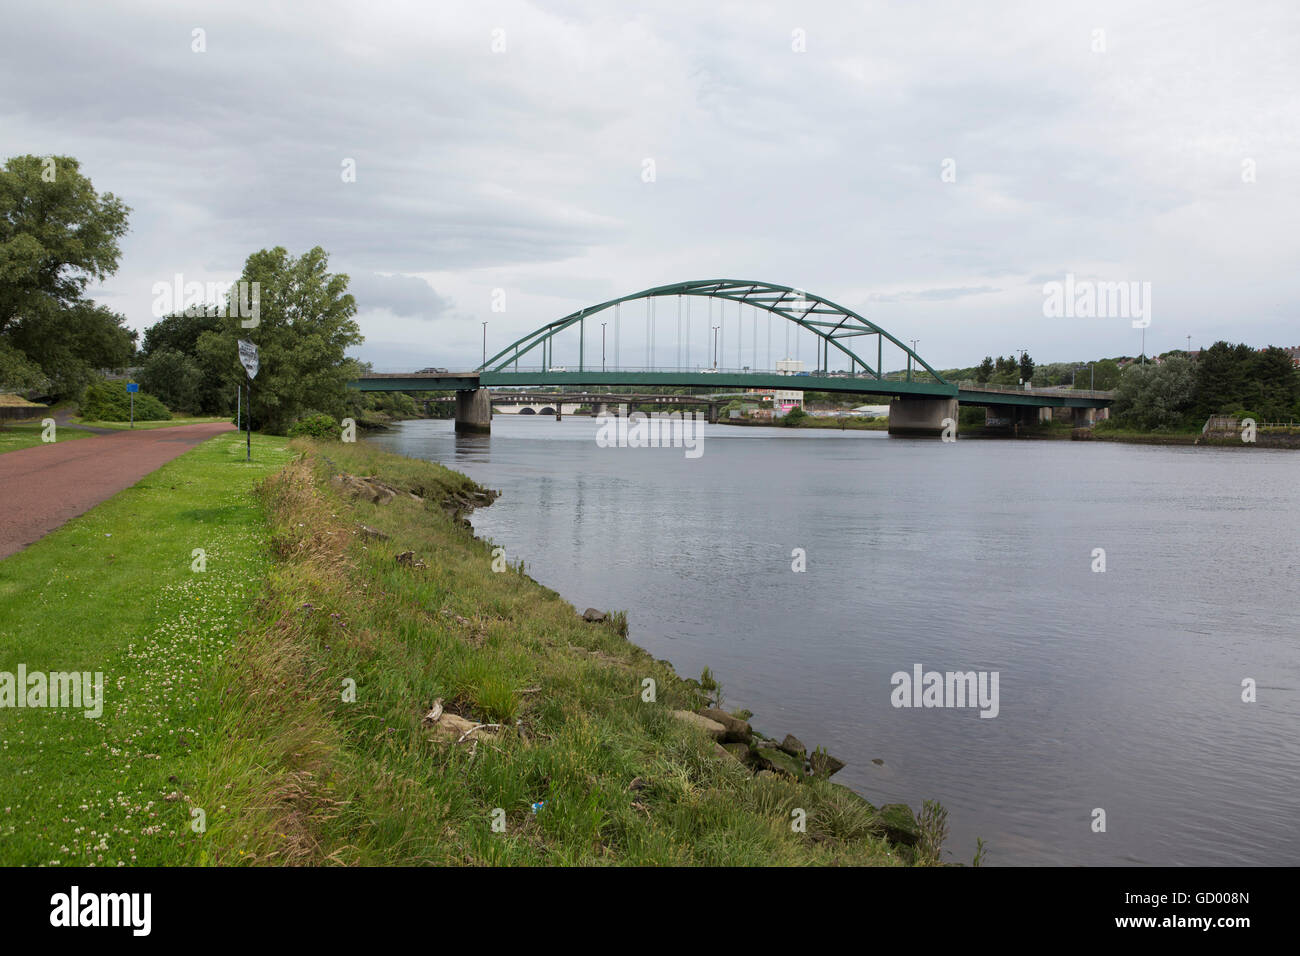 Il fiume Tyne tra Blaydon e Scotswood in Tyne e Wear, Inghilterra. Il ponte Scotswood attraversa il fiume Tyne. Foto Stock